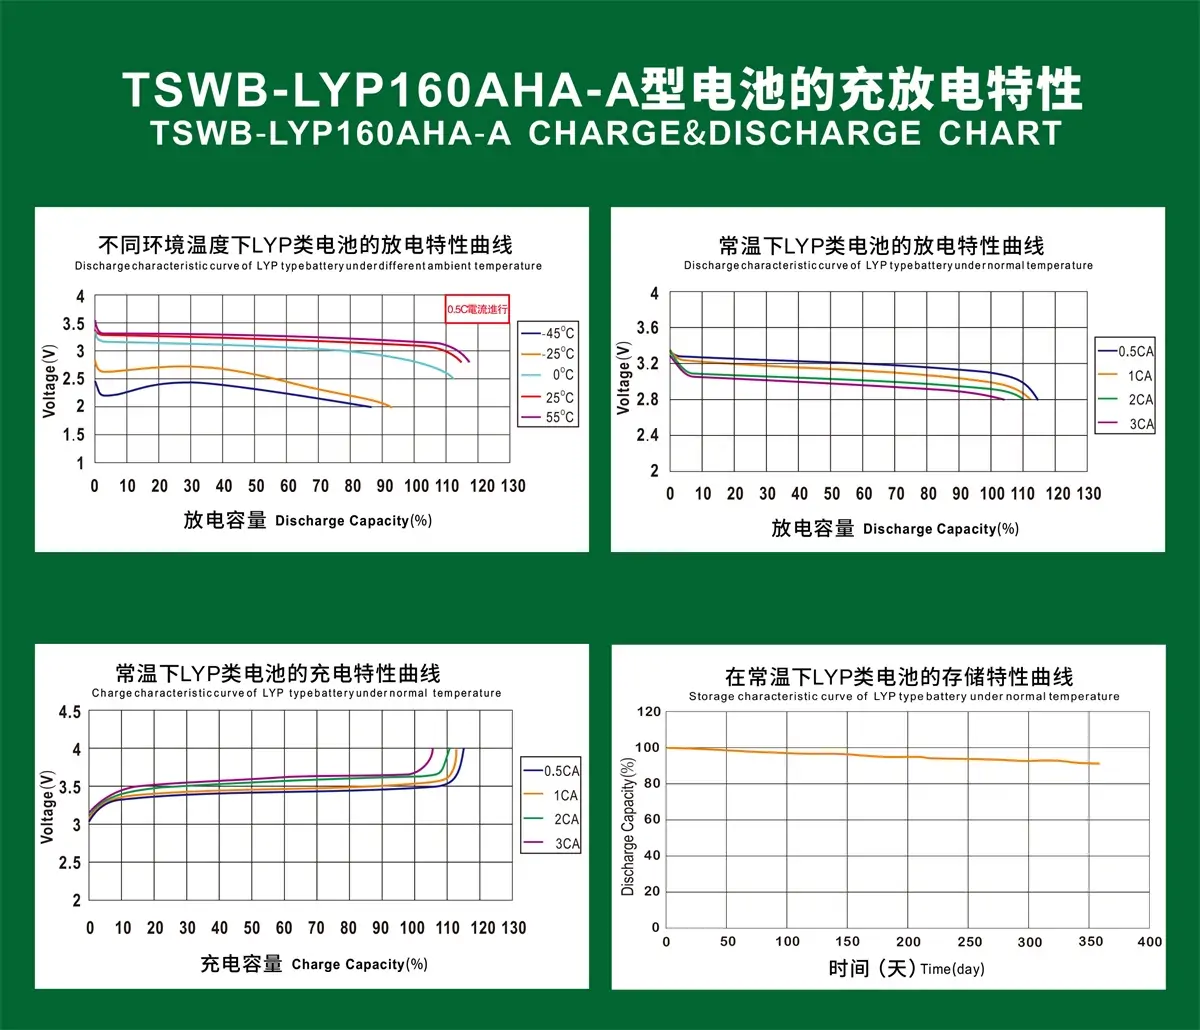 TSWB-LYP160AHA-A CHARGE&DISCHARGE CHART